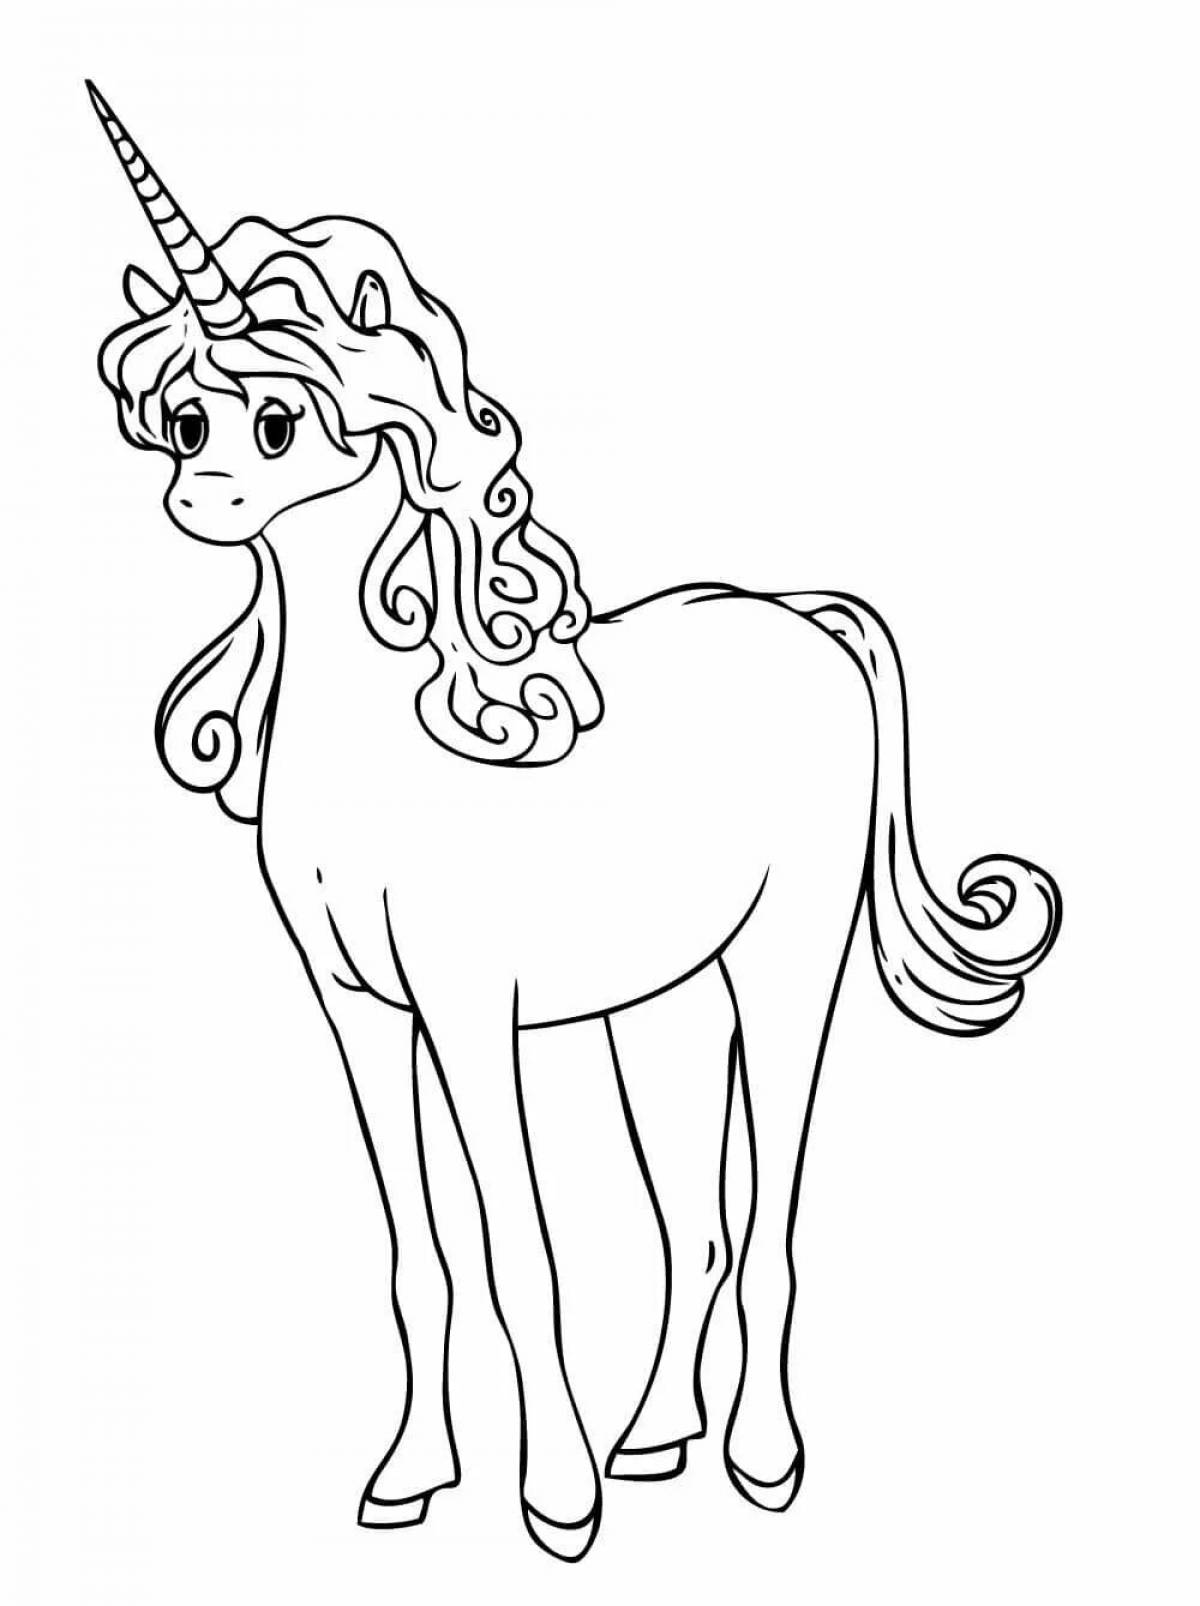 How to draw a unicorn #2